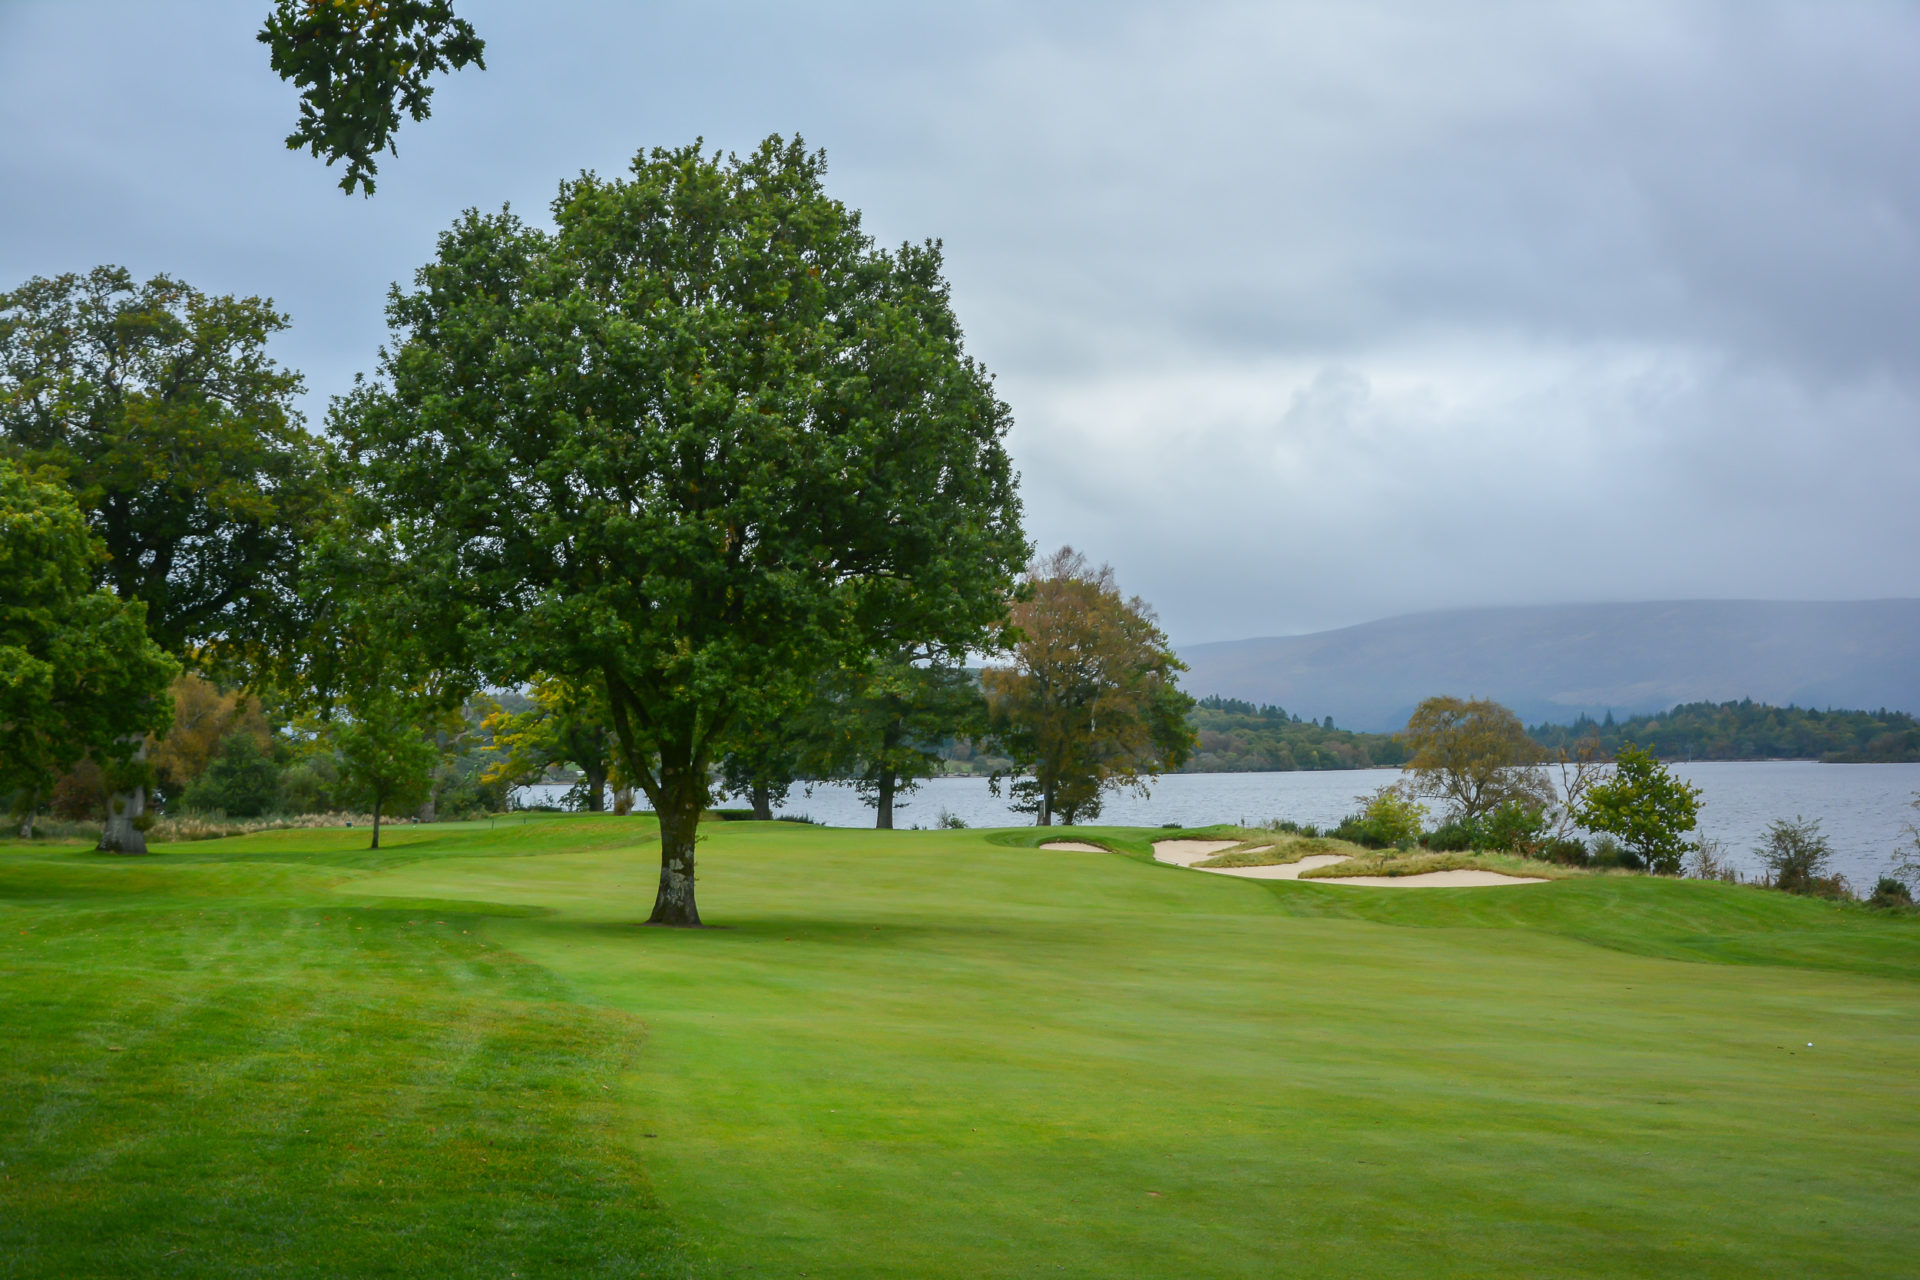 7th hole approach at Loch Lomond